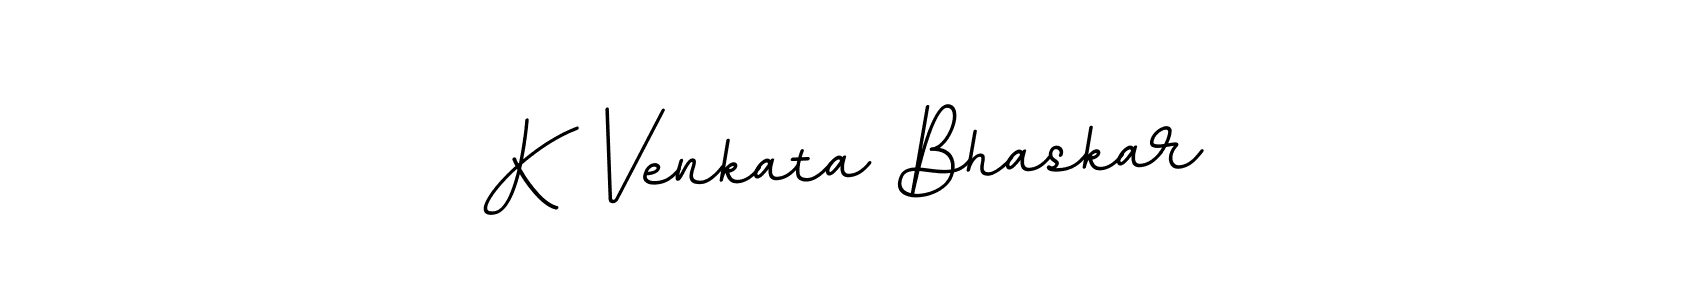 How to Draw K Venkata Bhaskar signature style? BallpointsItalic-DORy9 is a latest design signature styles for name K Venkata Bhaskar. K Venkata Bhaskar signature style 11 images and pictures png